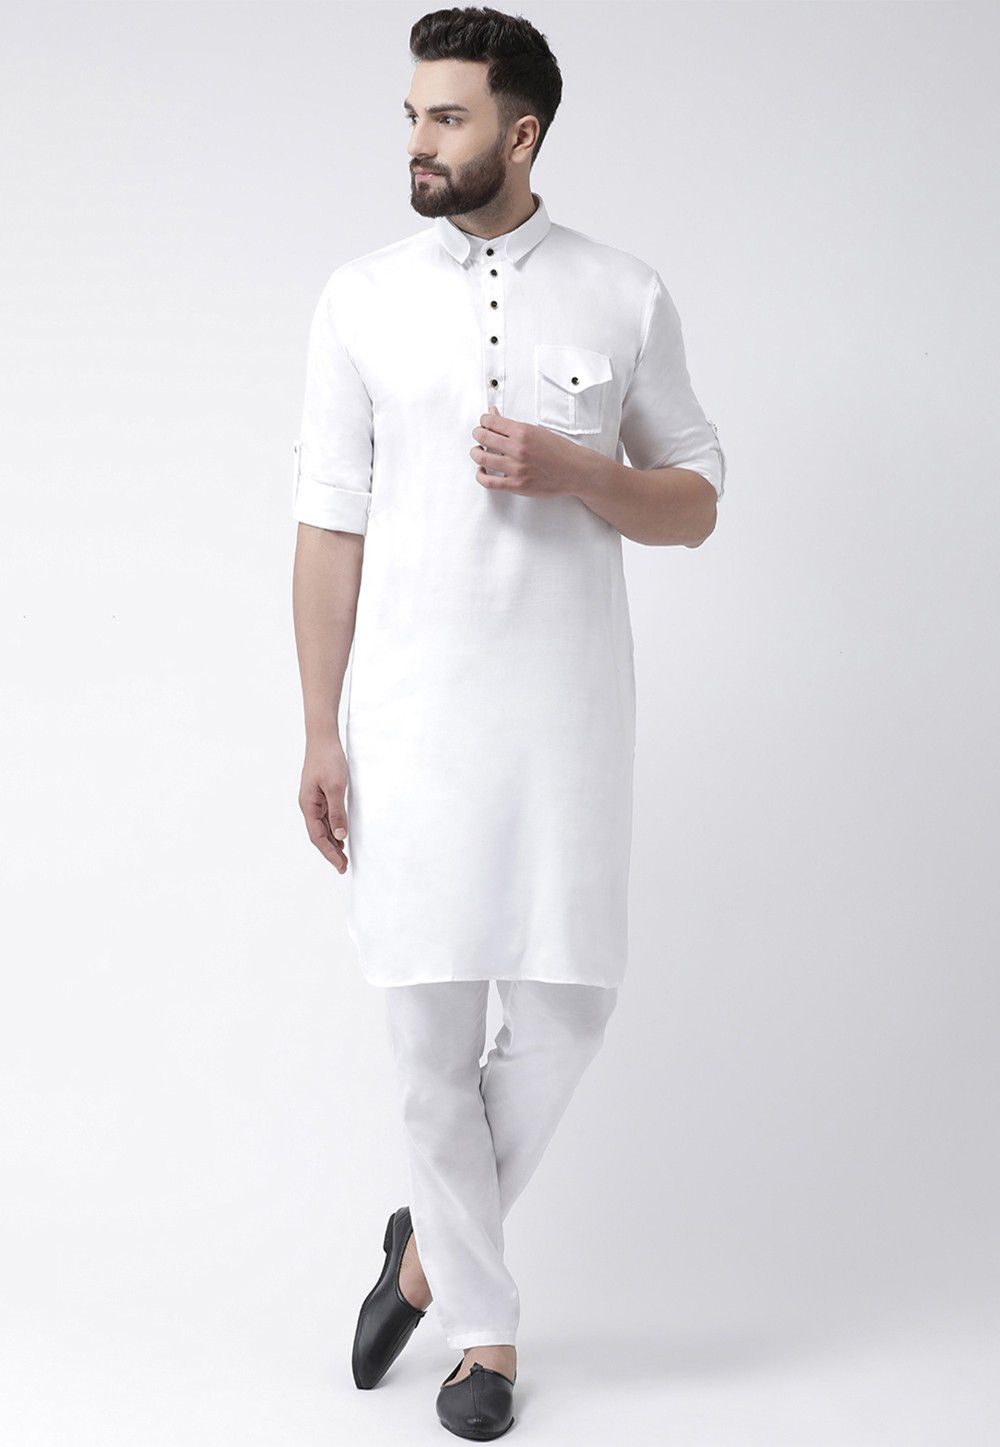 Buy KUSHANJALI Men's Cotton Craft Eid/Ramzan Special Pathani Suit (Light  Beige, 36) at Amazon.in